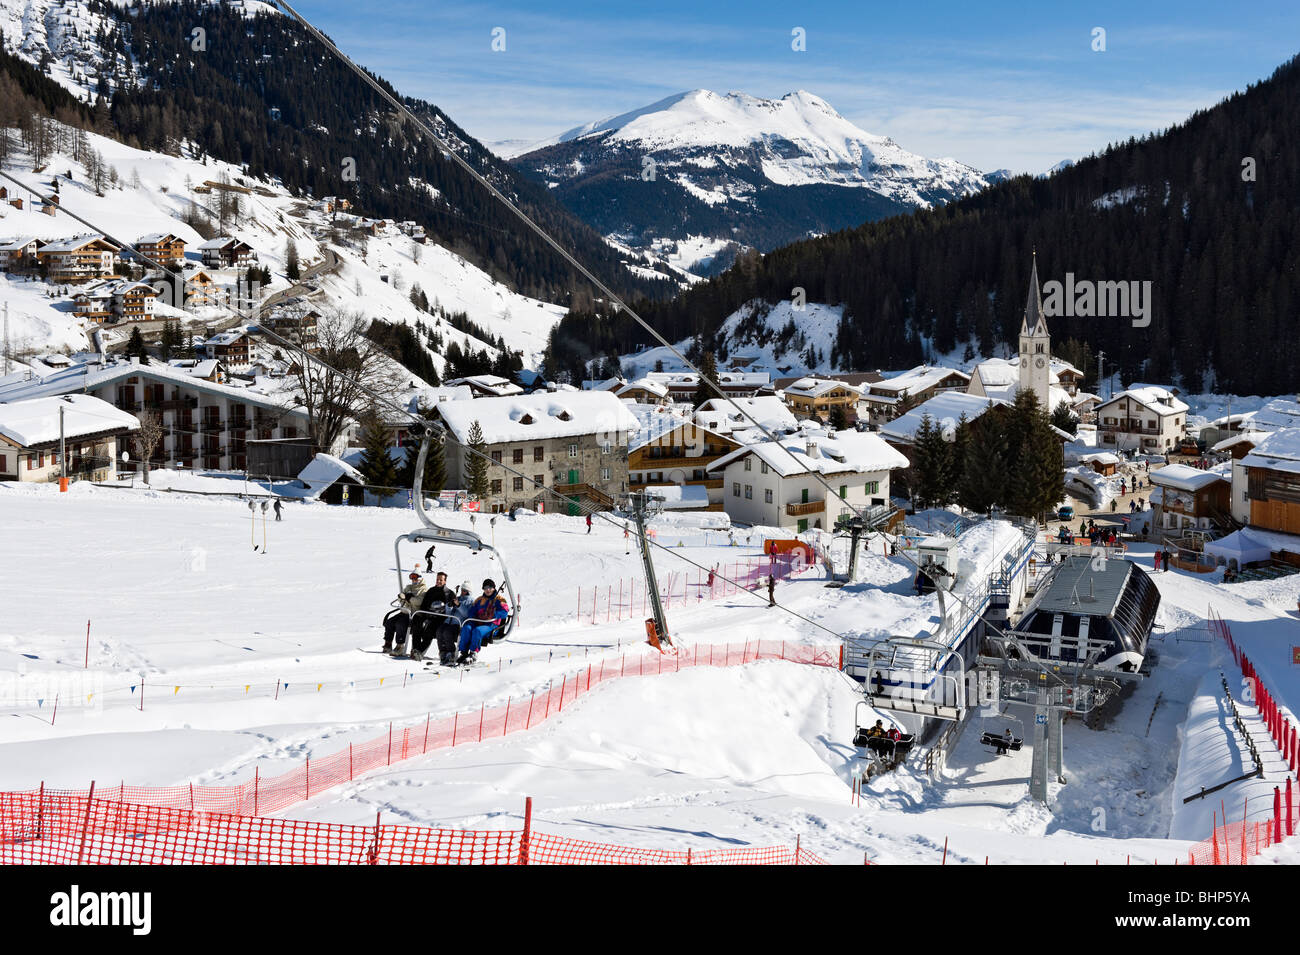 View over the resort of Arabba from the slopes, Sella Ronda Ski Area, Alta Badia, Dolomites, Italy Stock Photo